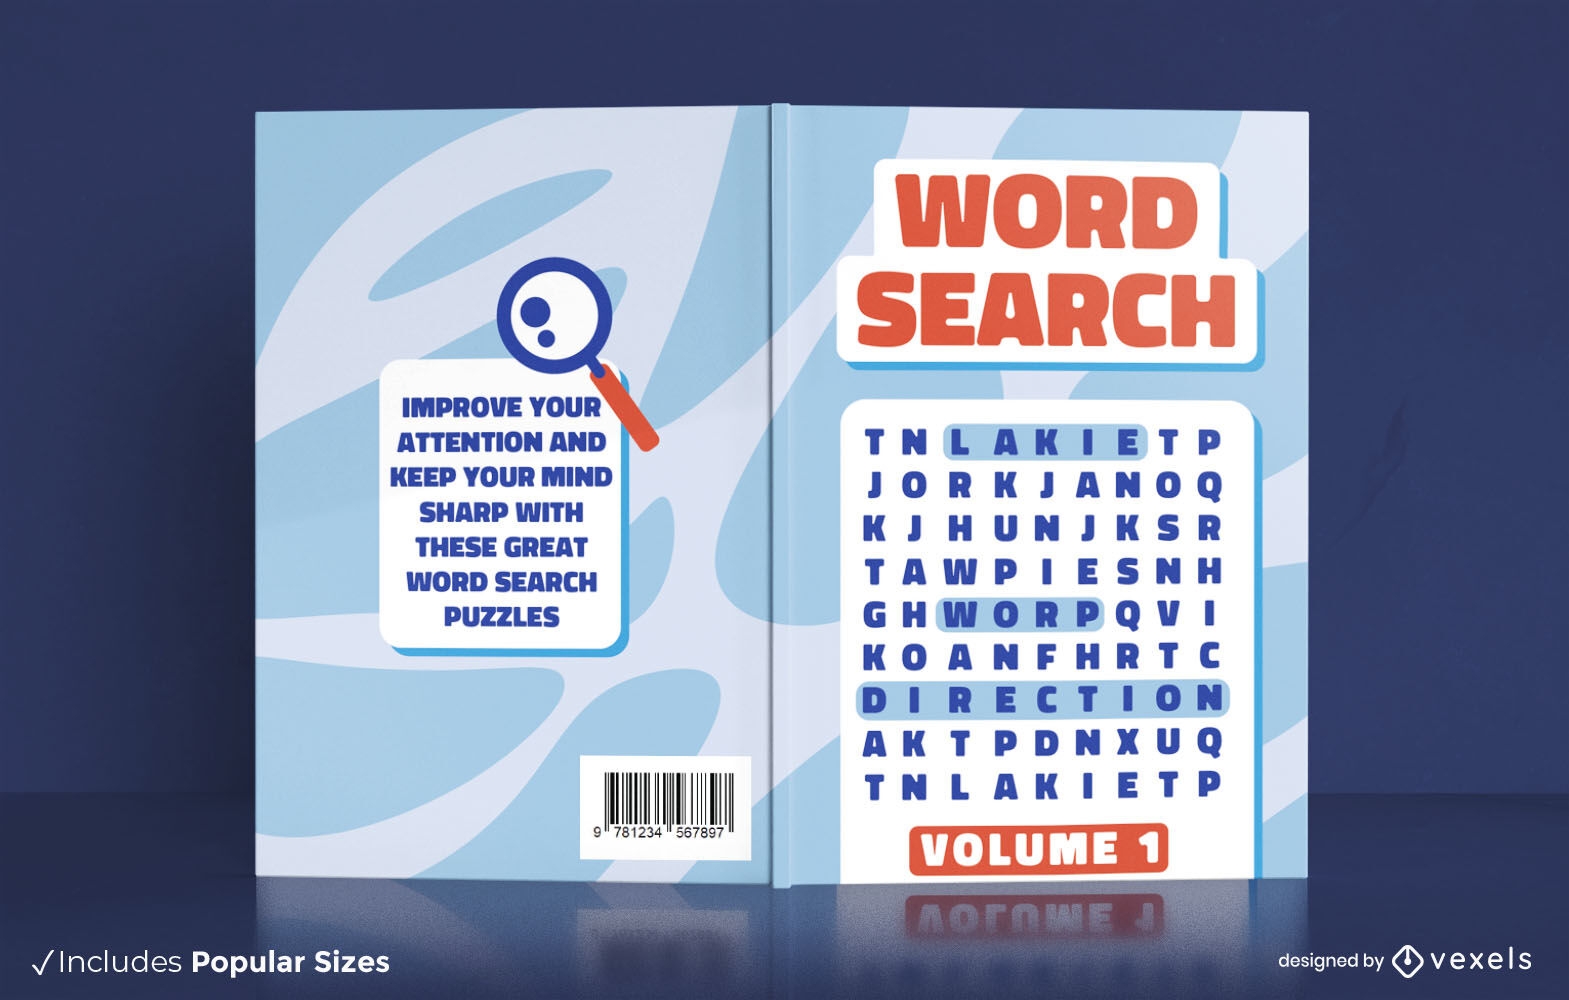 Word search puzzles fun book cover design